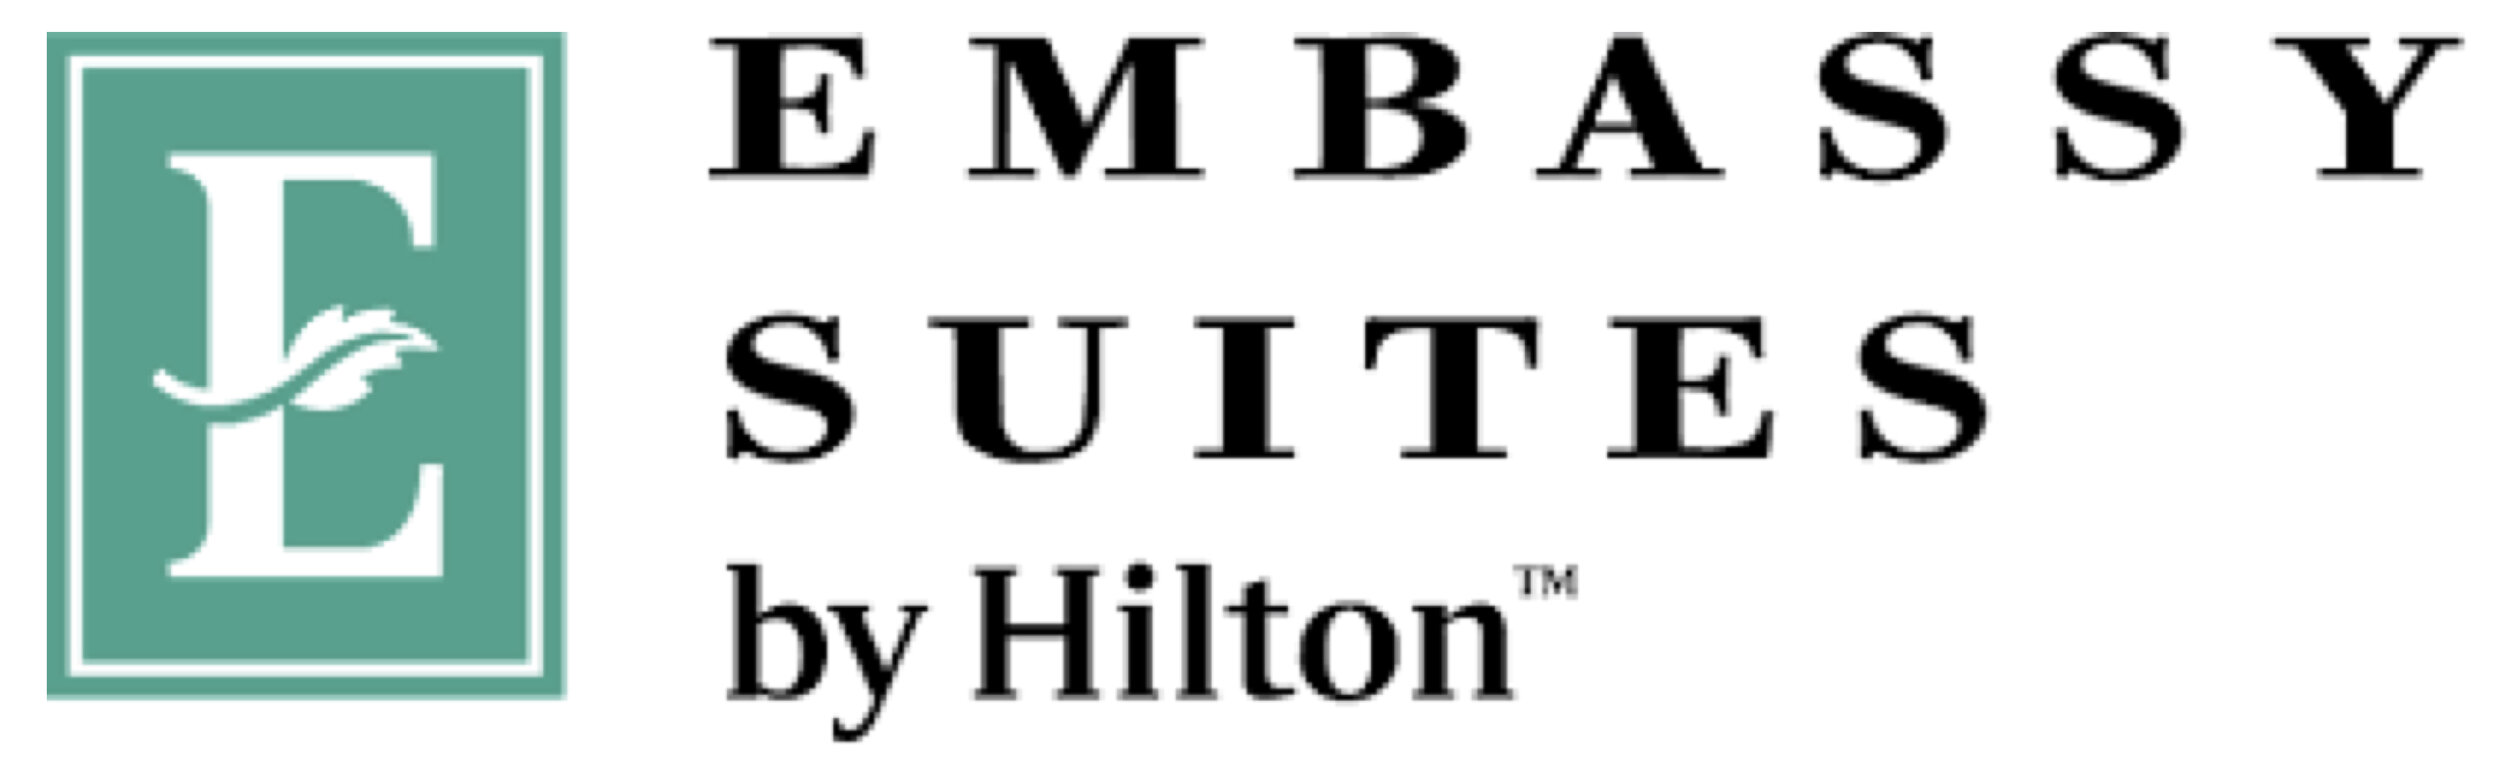 Embassy Suites by Hilton Logo.jpg